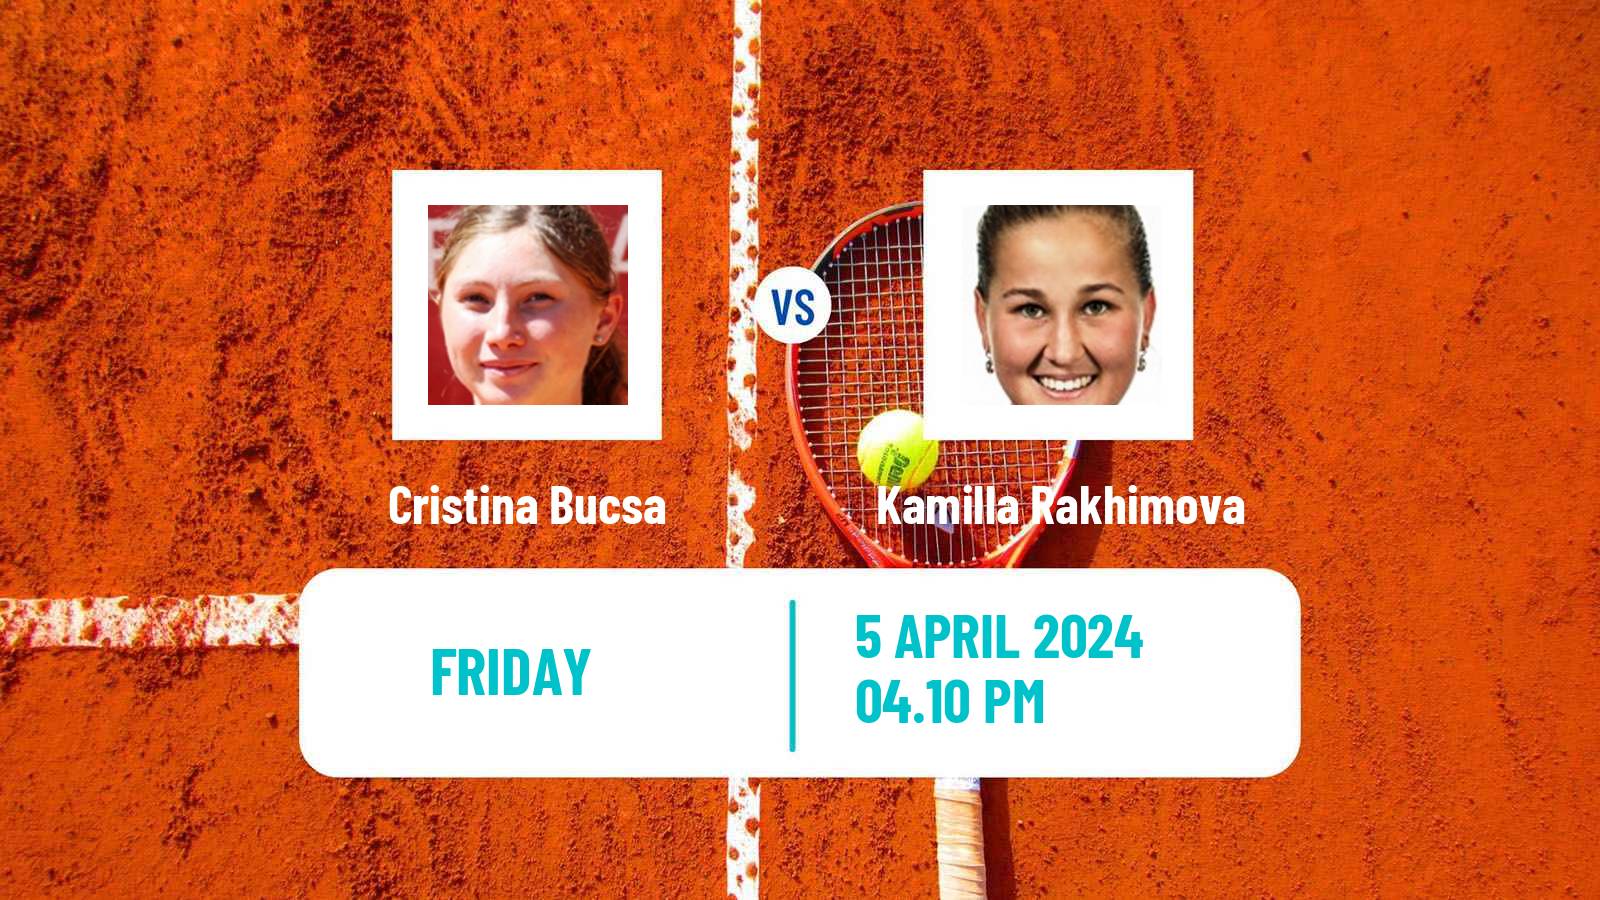 Tennis WTA Bogota Cristina Bucsa - Kamilla Rakhimova